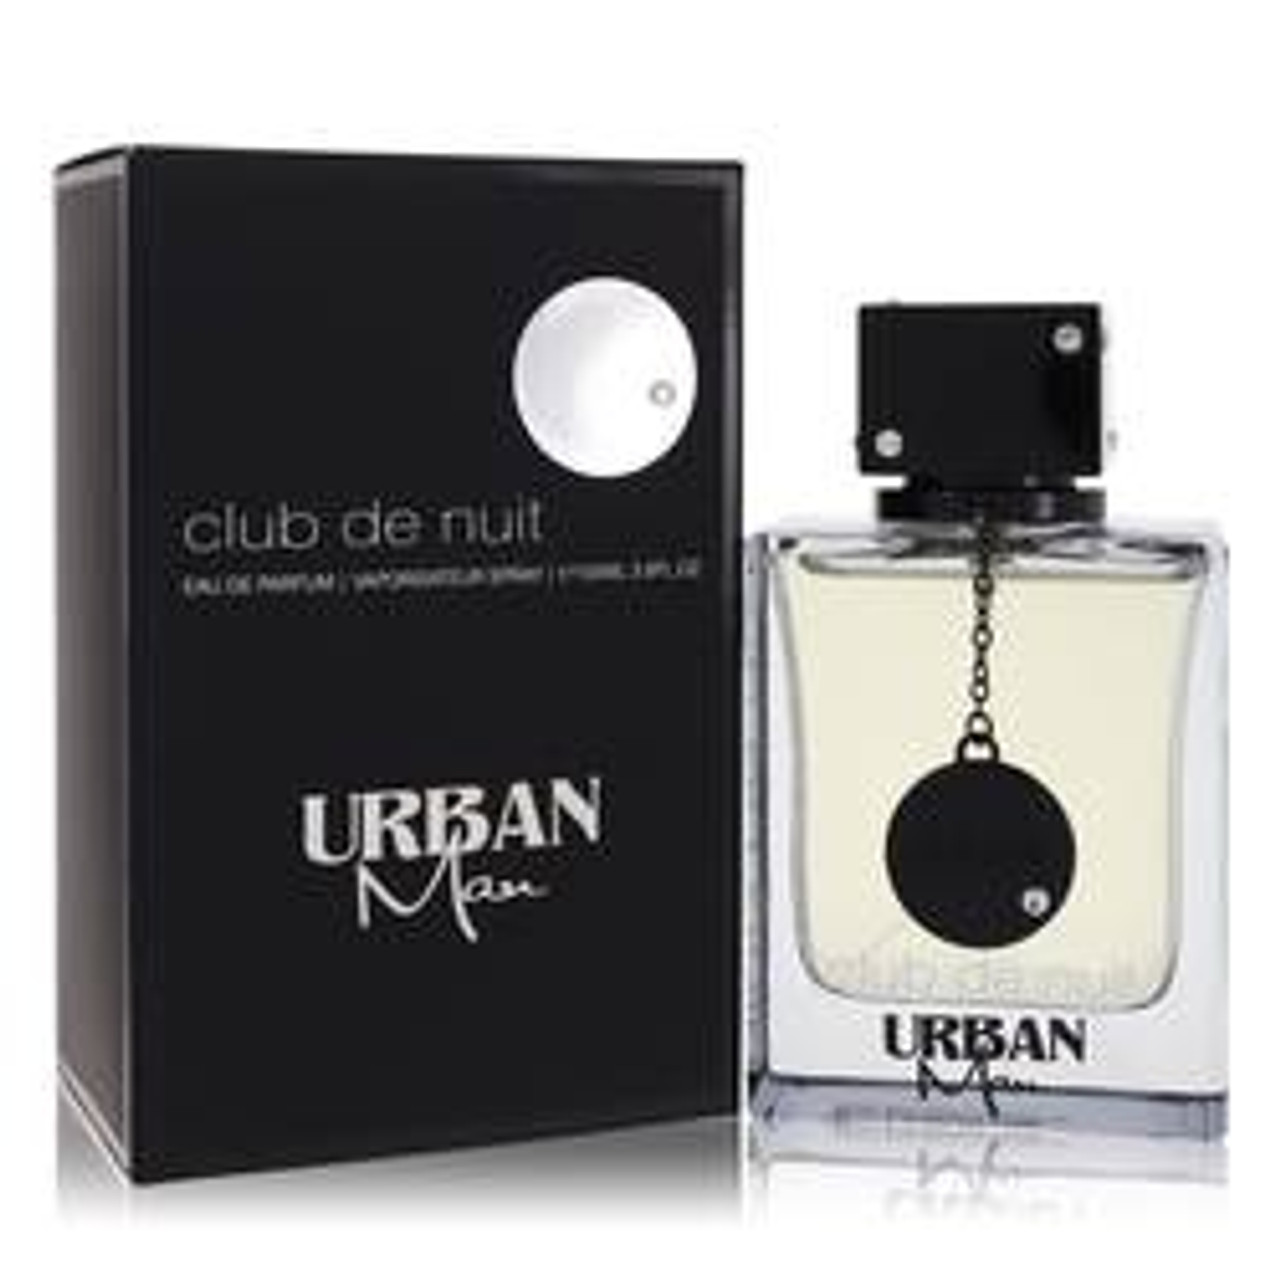 Club De Nuit Urban Man Cologne By Armaf Eau De Parfum Spray 3.4 oz for Men - [From 100.00 - Choose pk Qty ] - *Ships from Miami